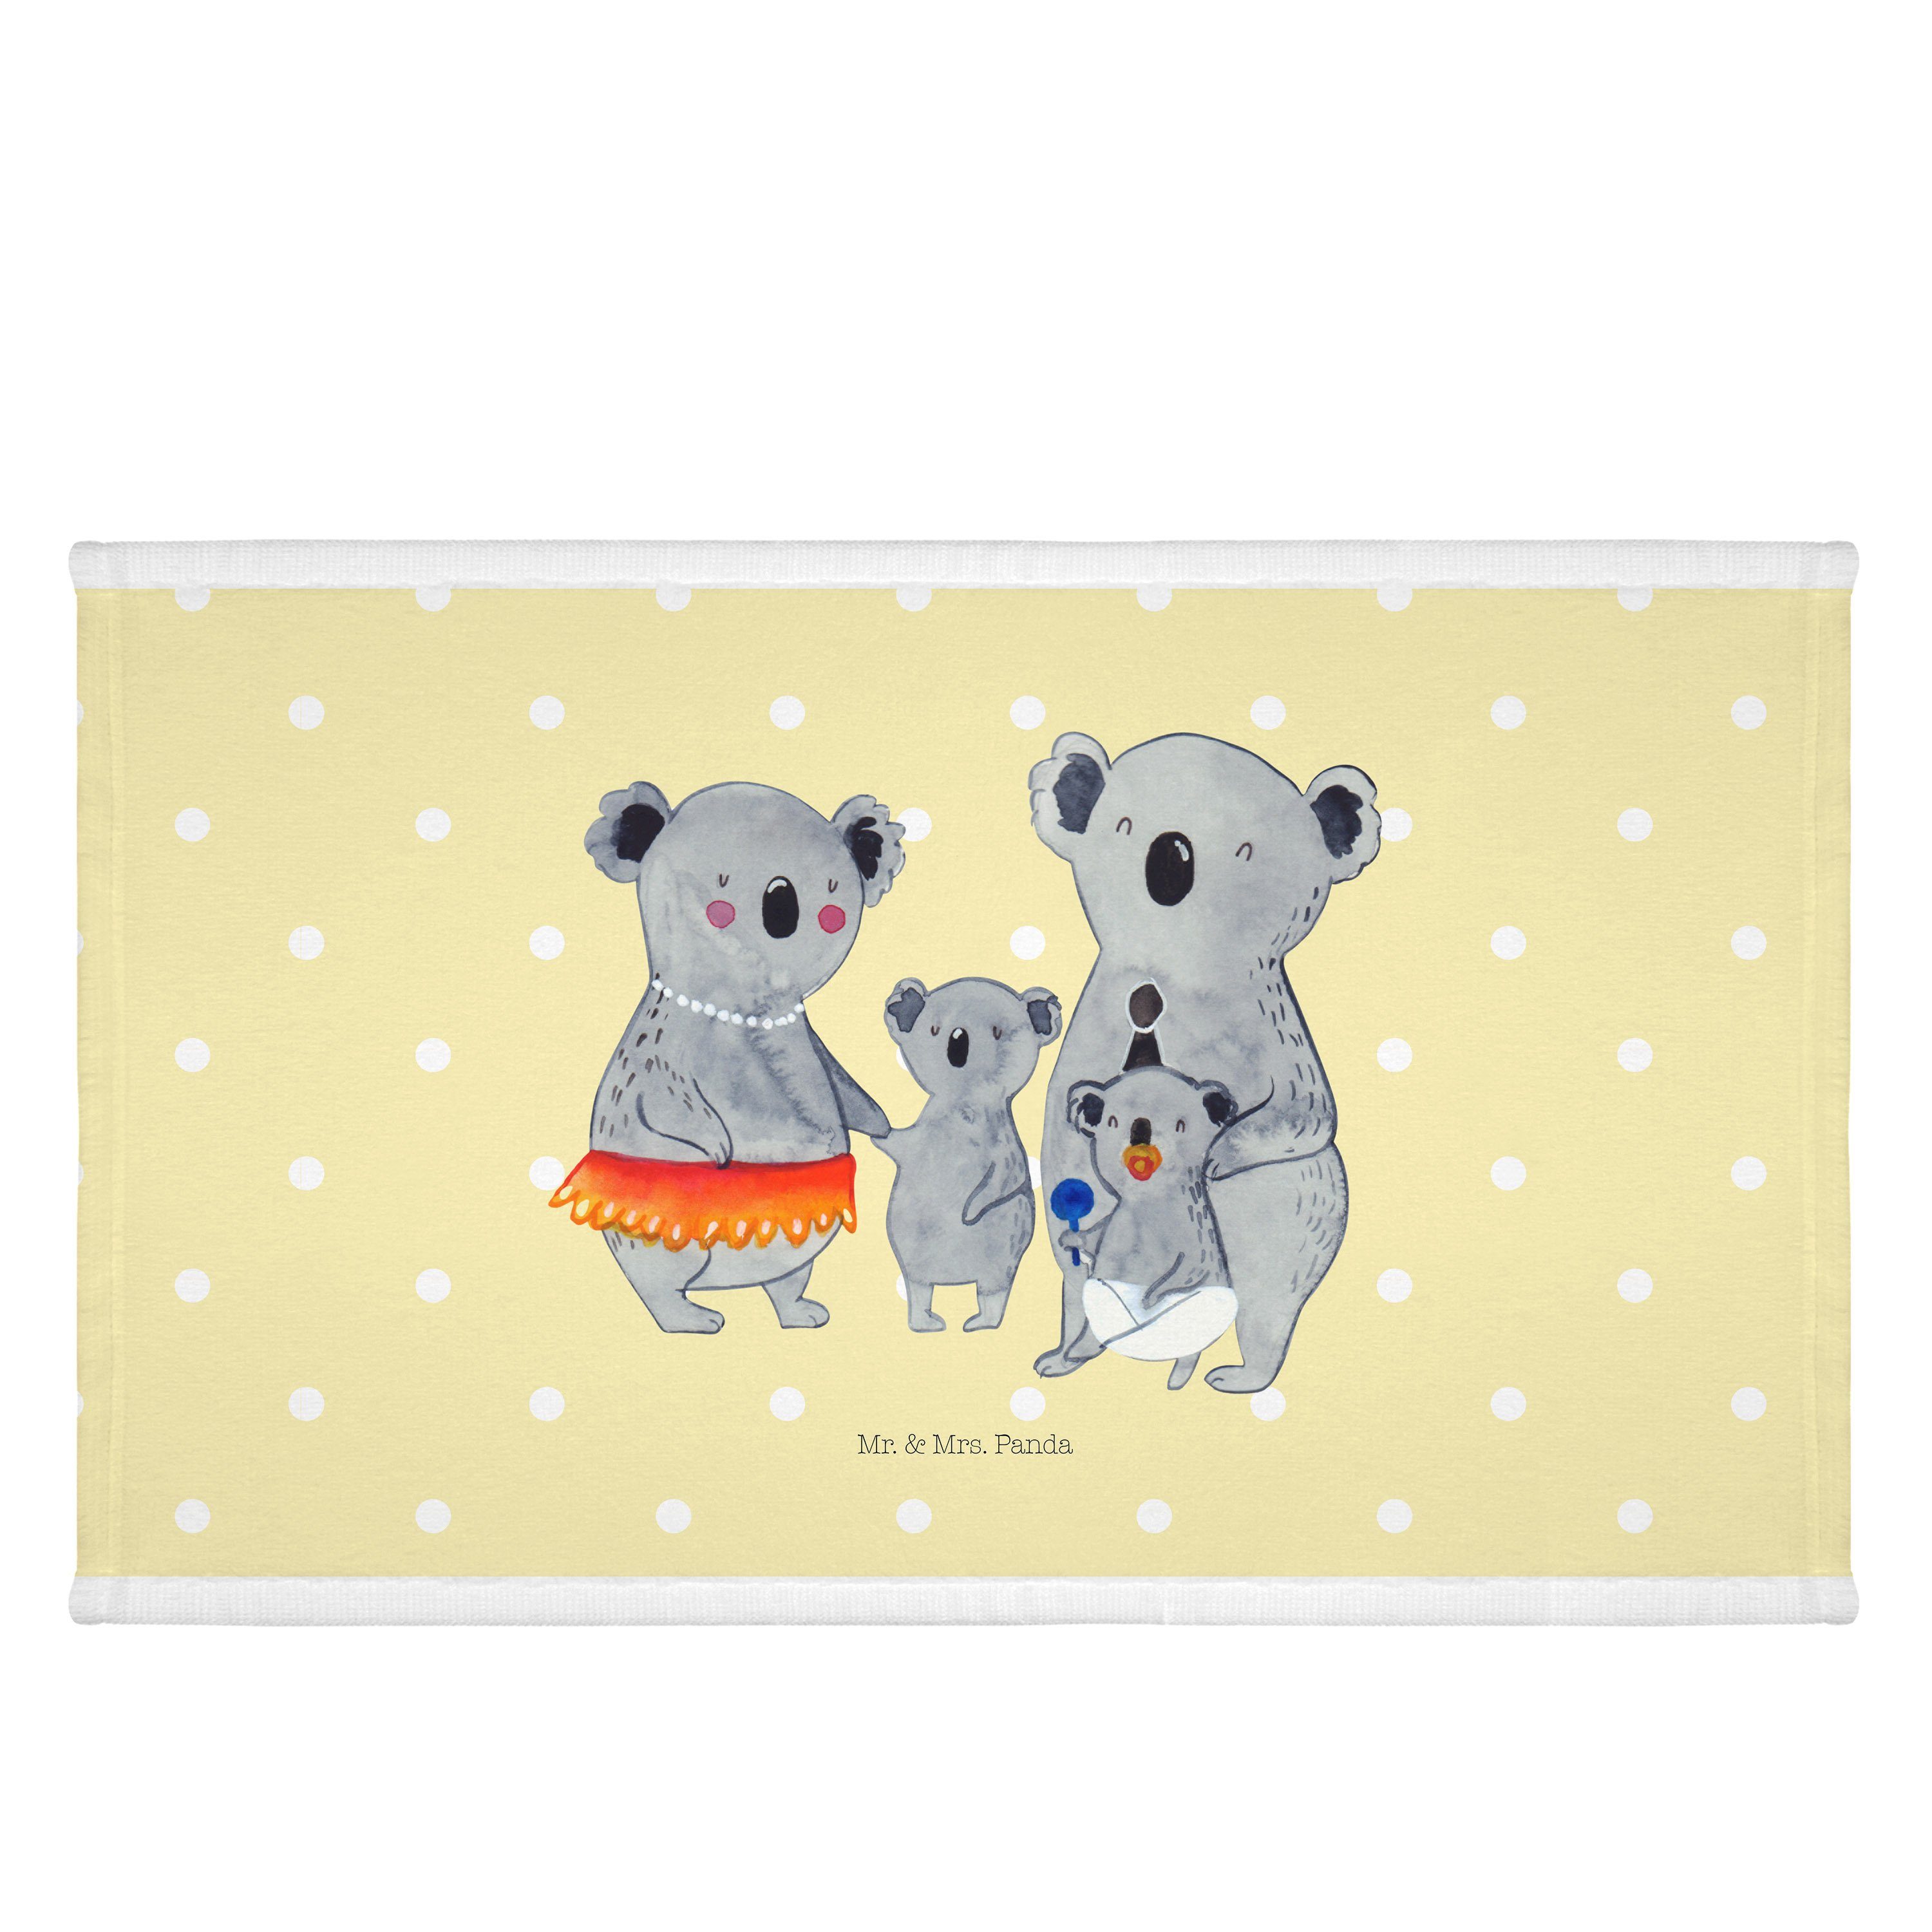 Mr. & Mrs. Panda Handtuch Koala Familie - Gelb Pastell - Geschenk, Kinder Handtuch, Opa, qualit, (1-St)